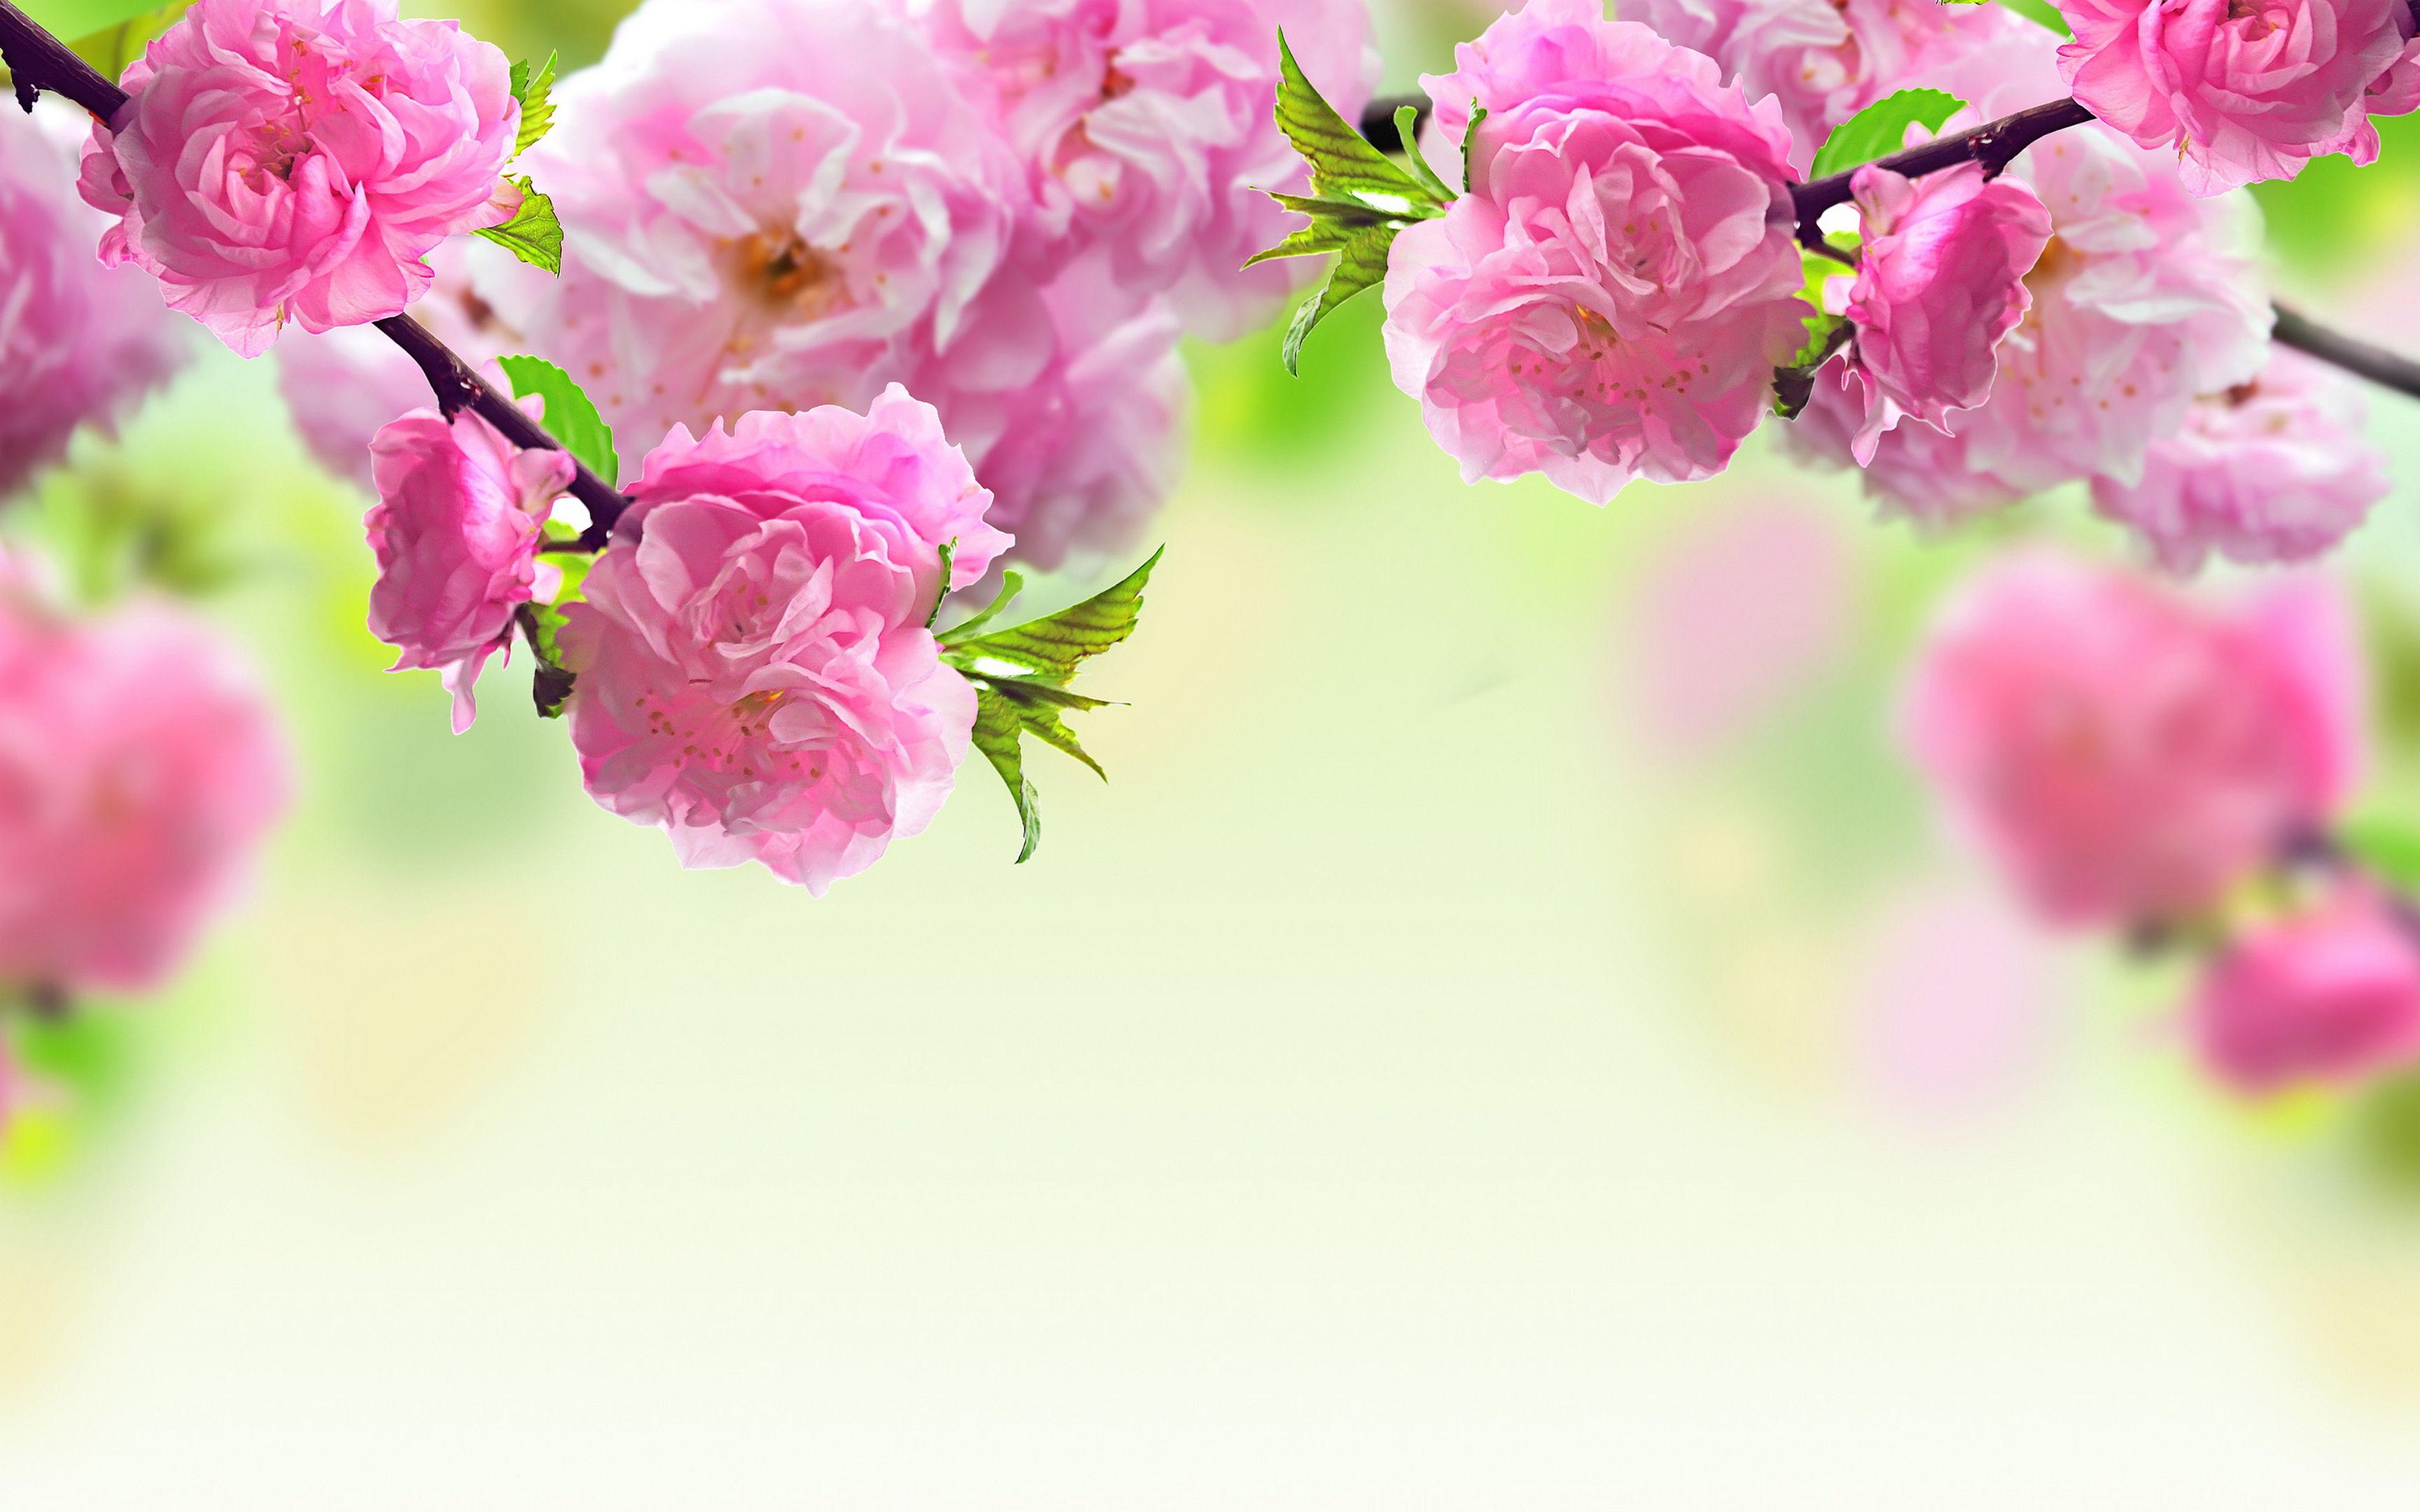 Spring Background. Spring flowers background, Spring flowers wallpaper, Pink spring flowers